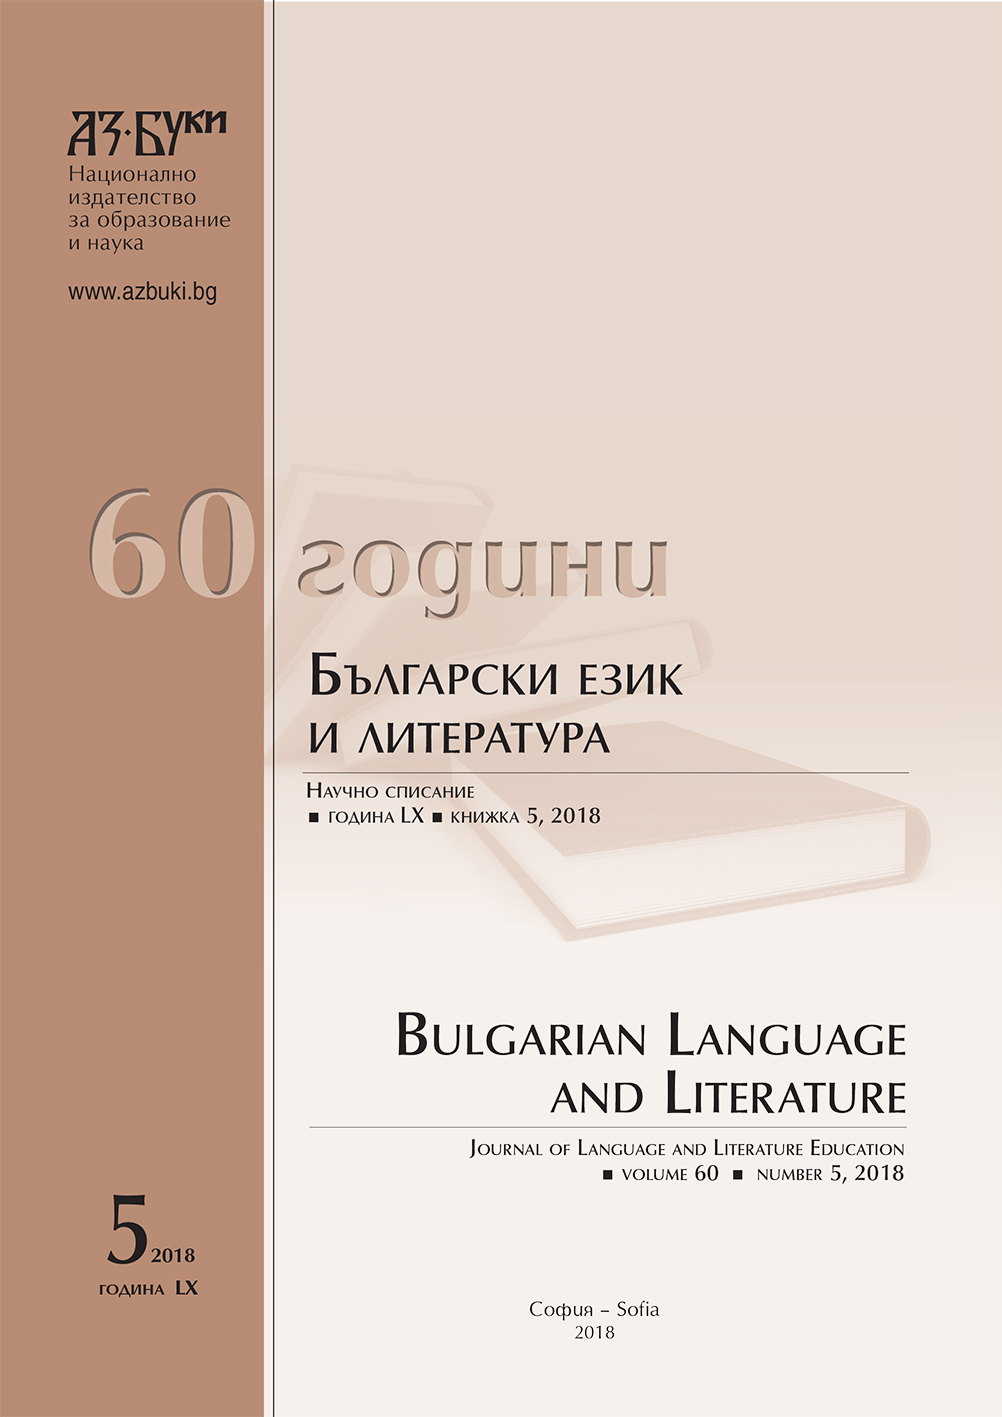 65th Anniversary of Prof. Dr. Tatyana Angelova Cover Image